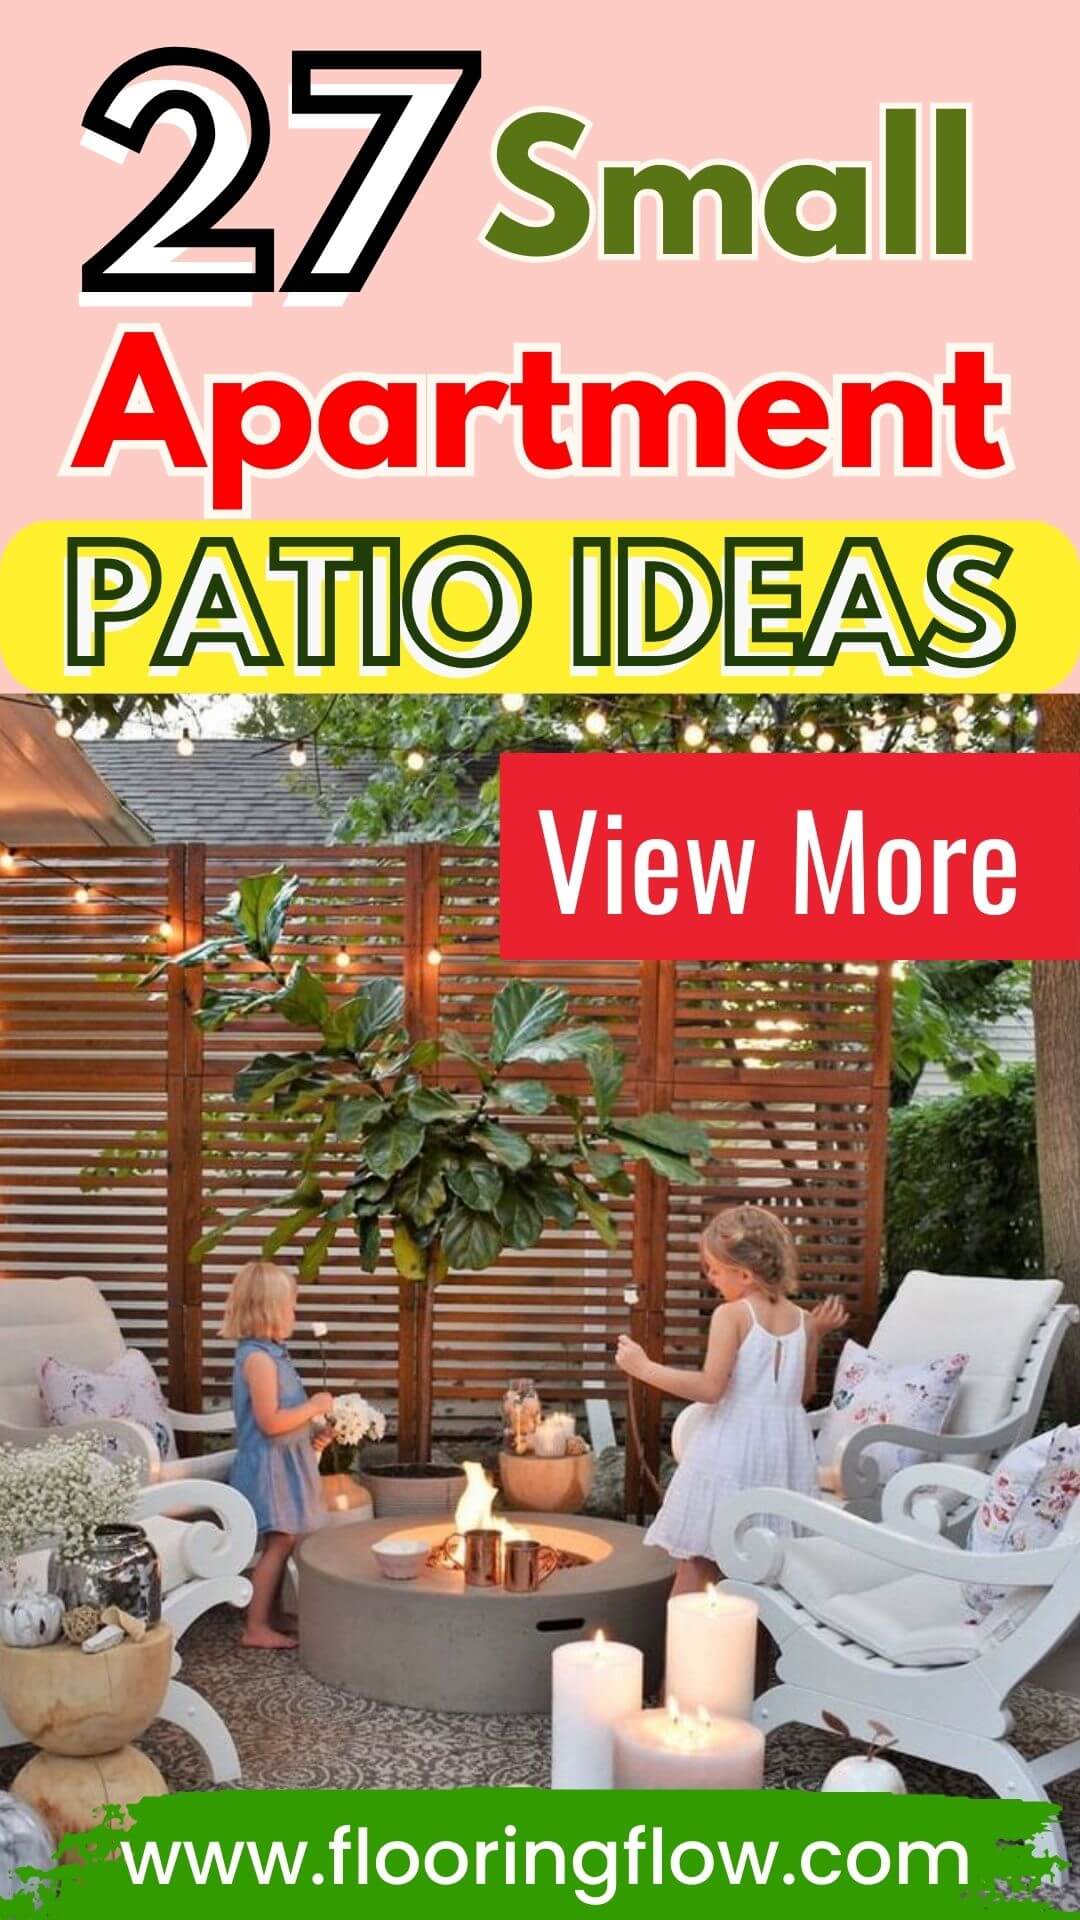 Small Apartment Patio Ideas